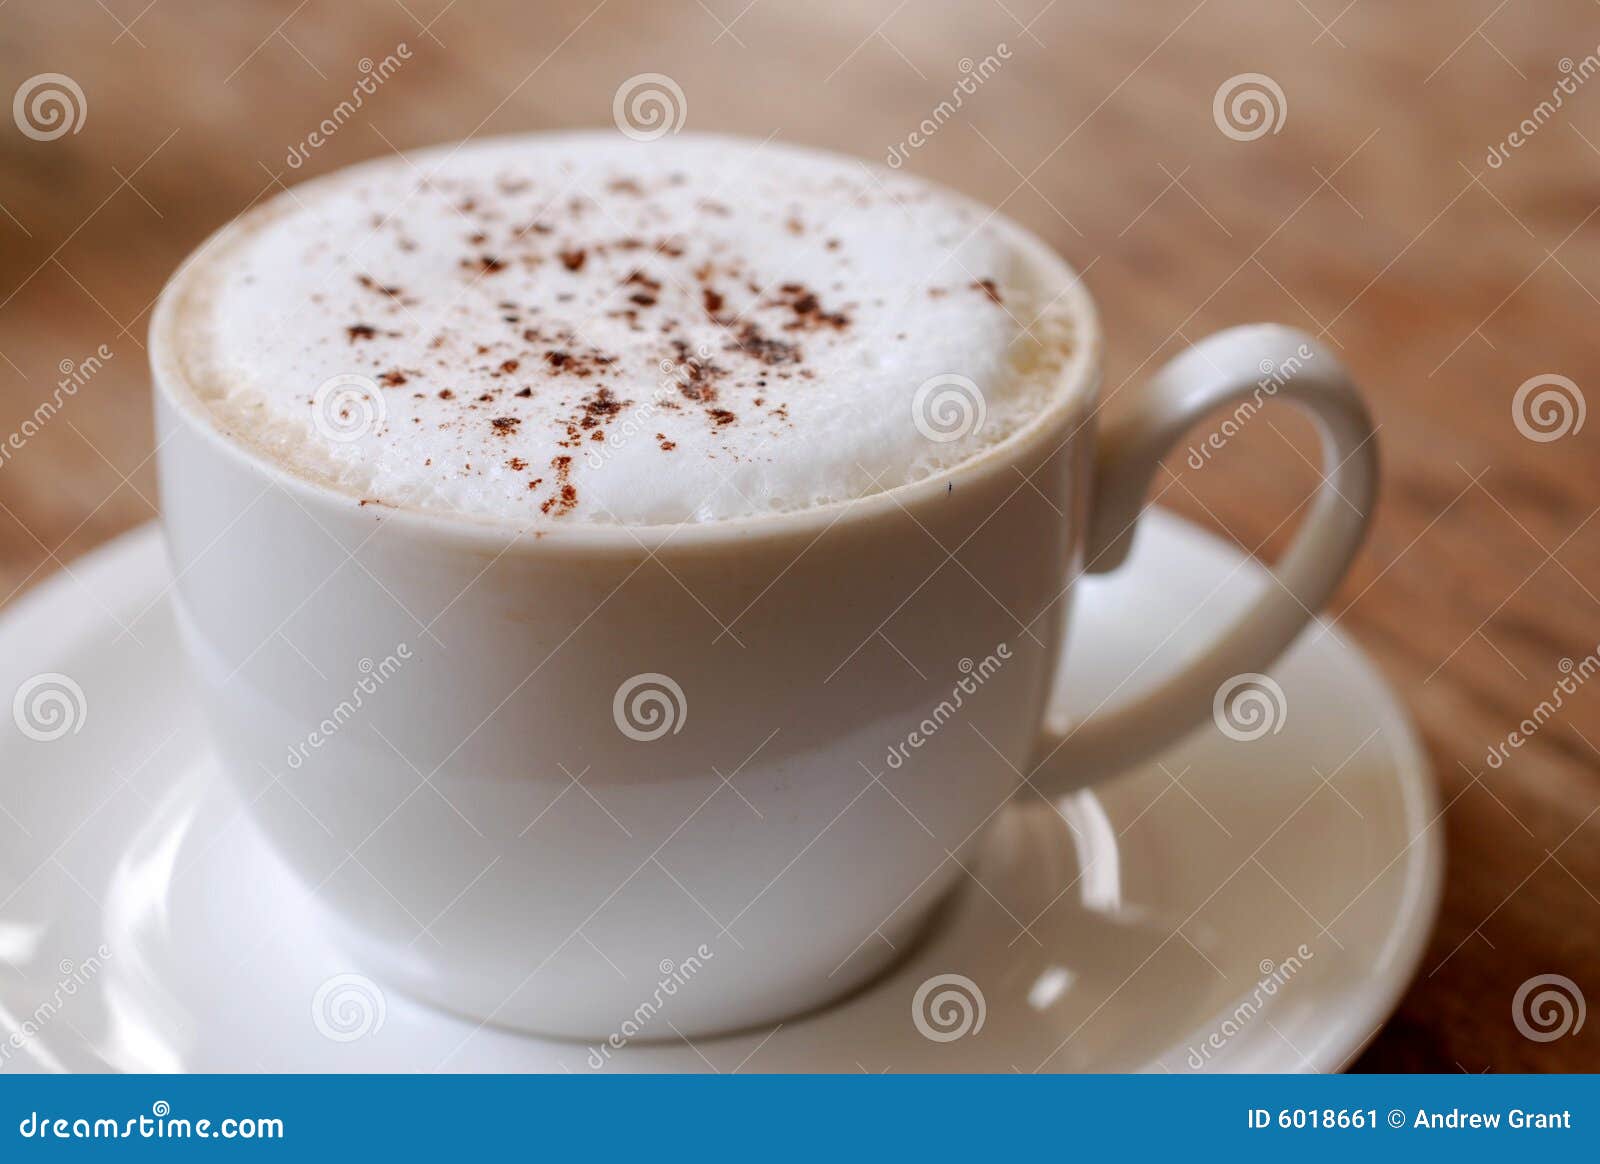 morning cappuccino